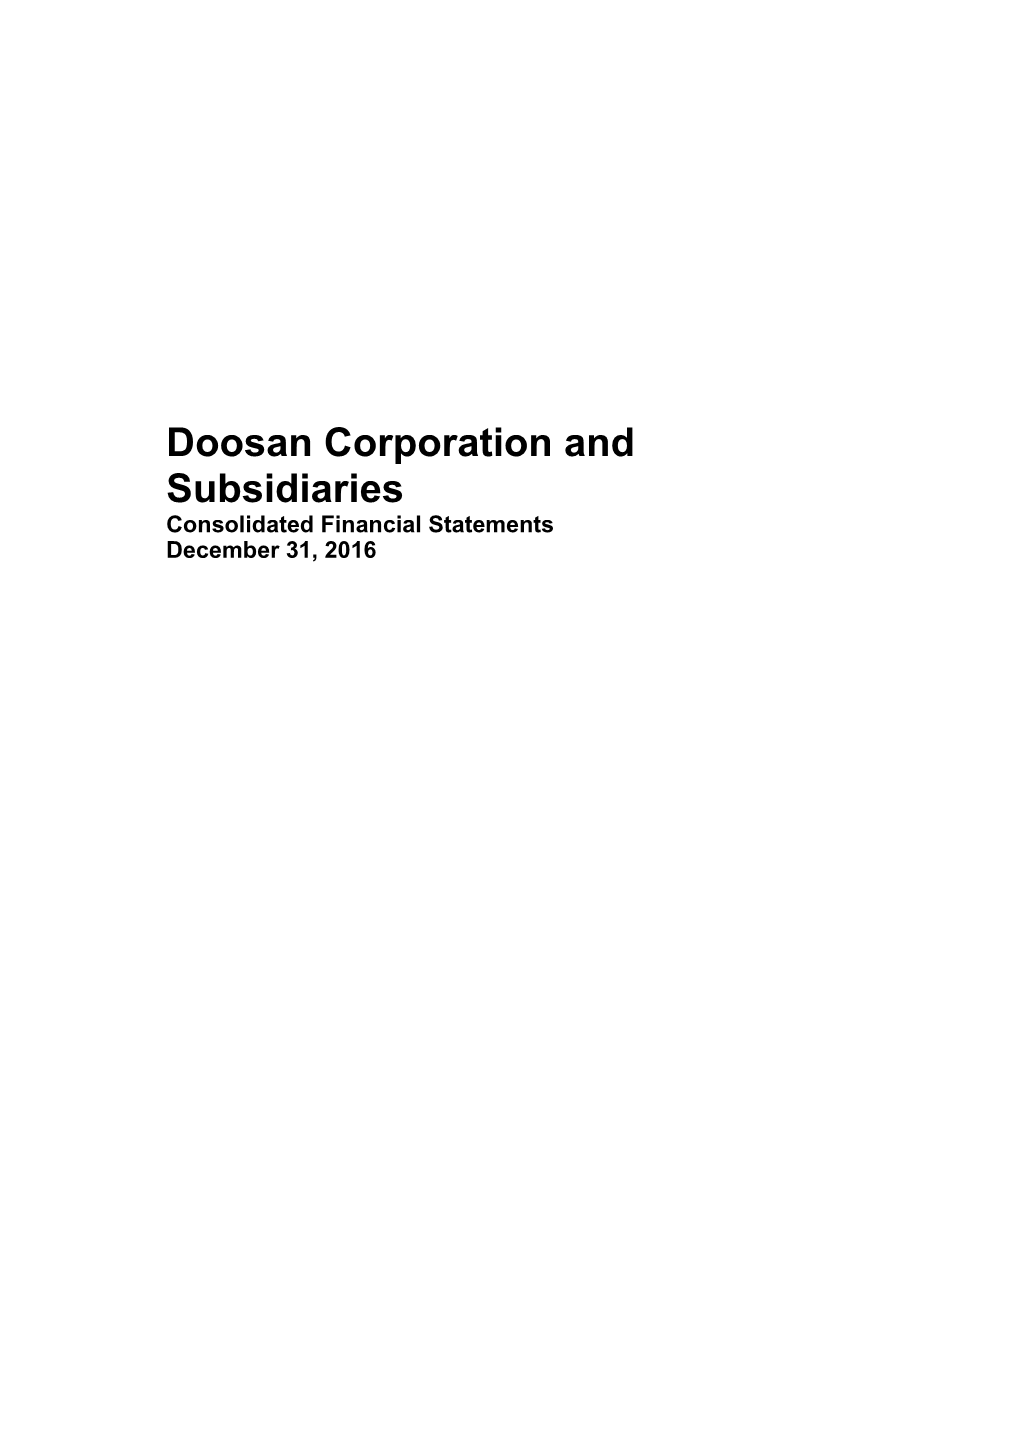 Doosan Corporation and Subsidiaries Consolidated Financial Statements December 31, 2016 Doosan Corporation and Subsidiaries Index December 31, 2016 and 2015